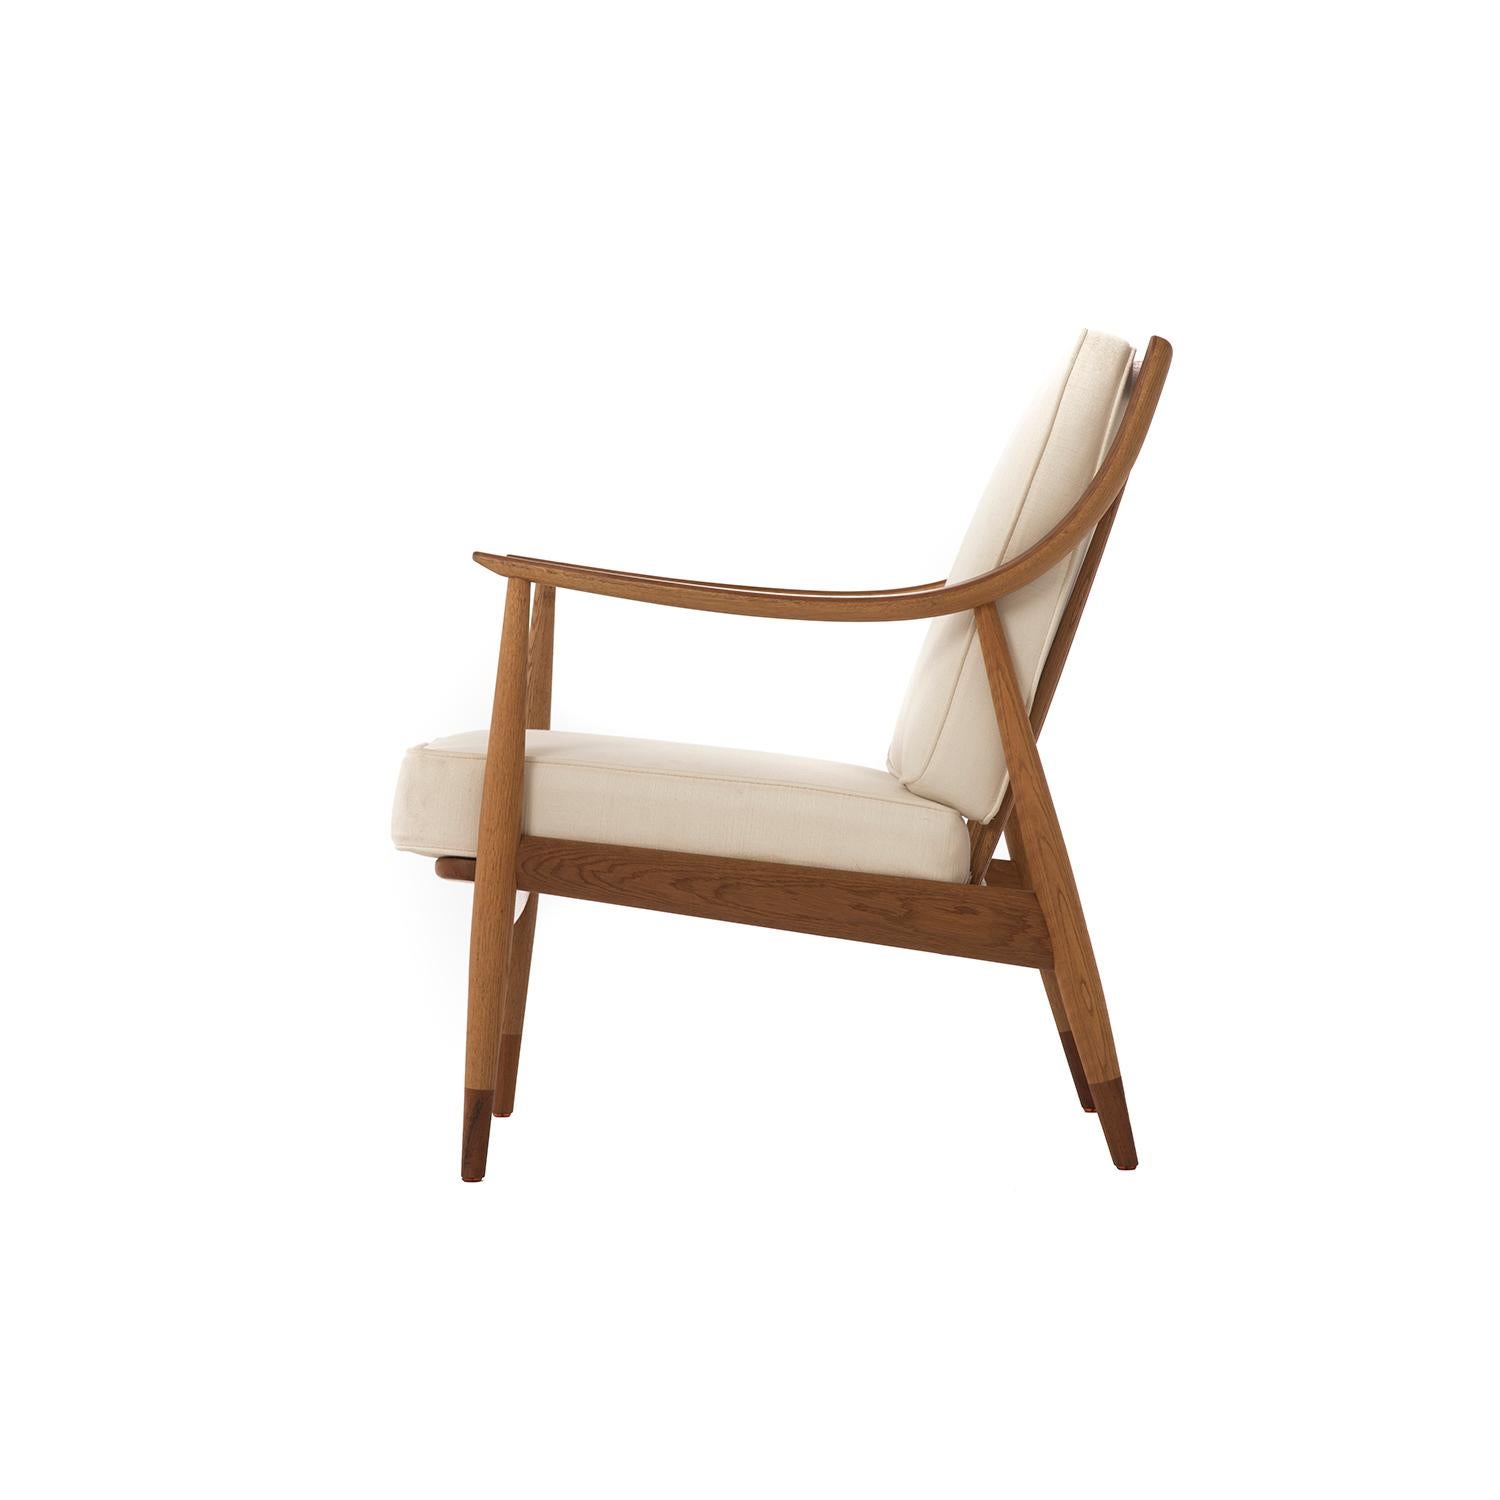 Scandinavian Modern Danish Modern Teak and Oak Lounge Chair, Sweeping Arms Hvidt & Molgaard Design